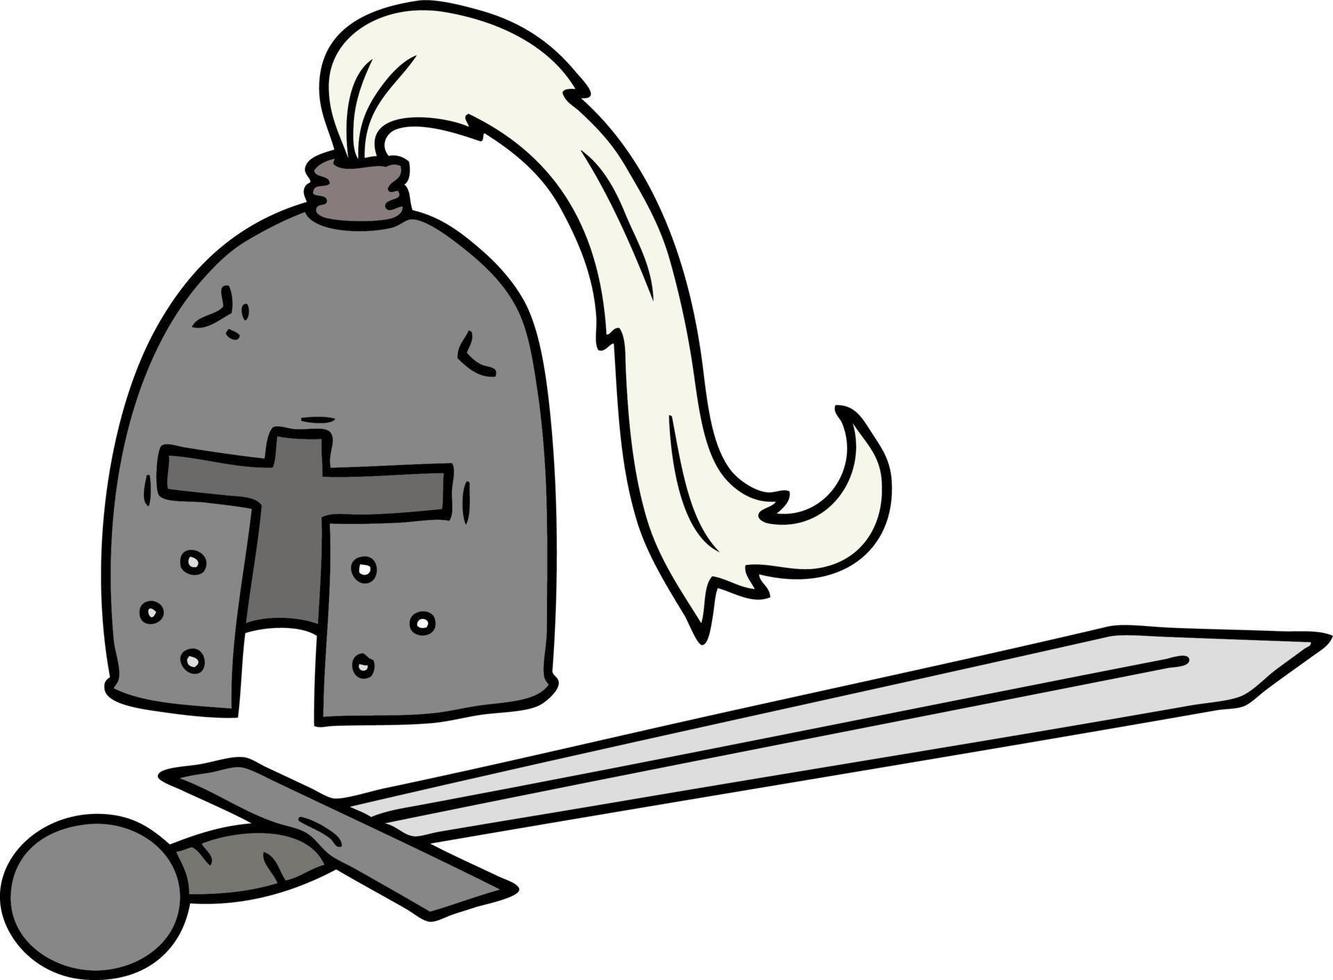 cartoon doodle of a medieval helmet and sword vector